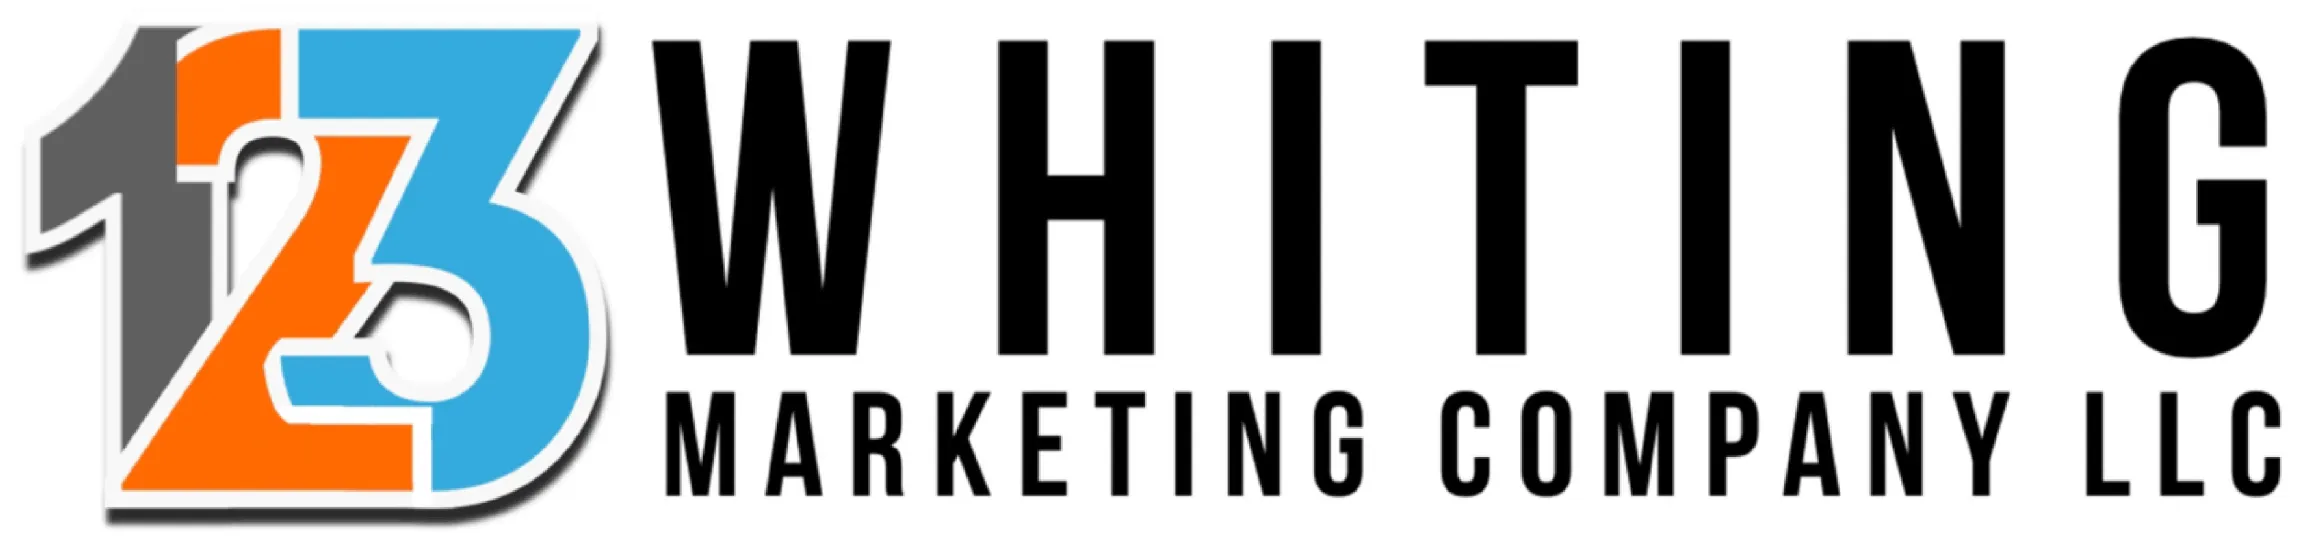 123 Whiting Marketing Company LLC, Logo